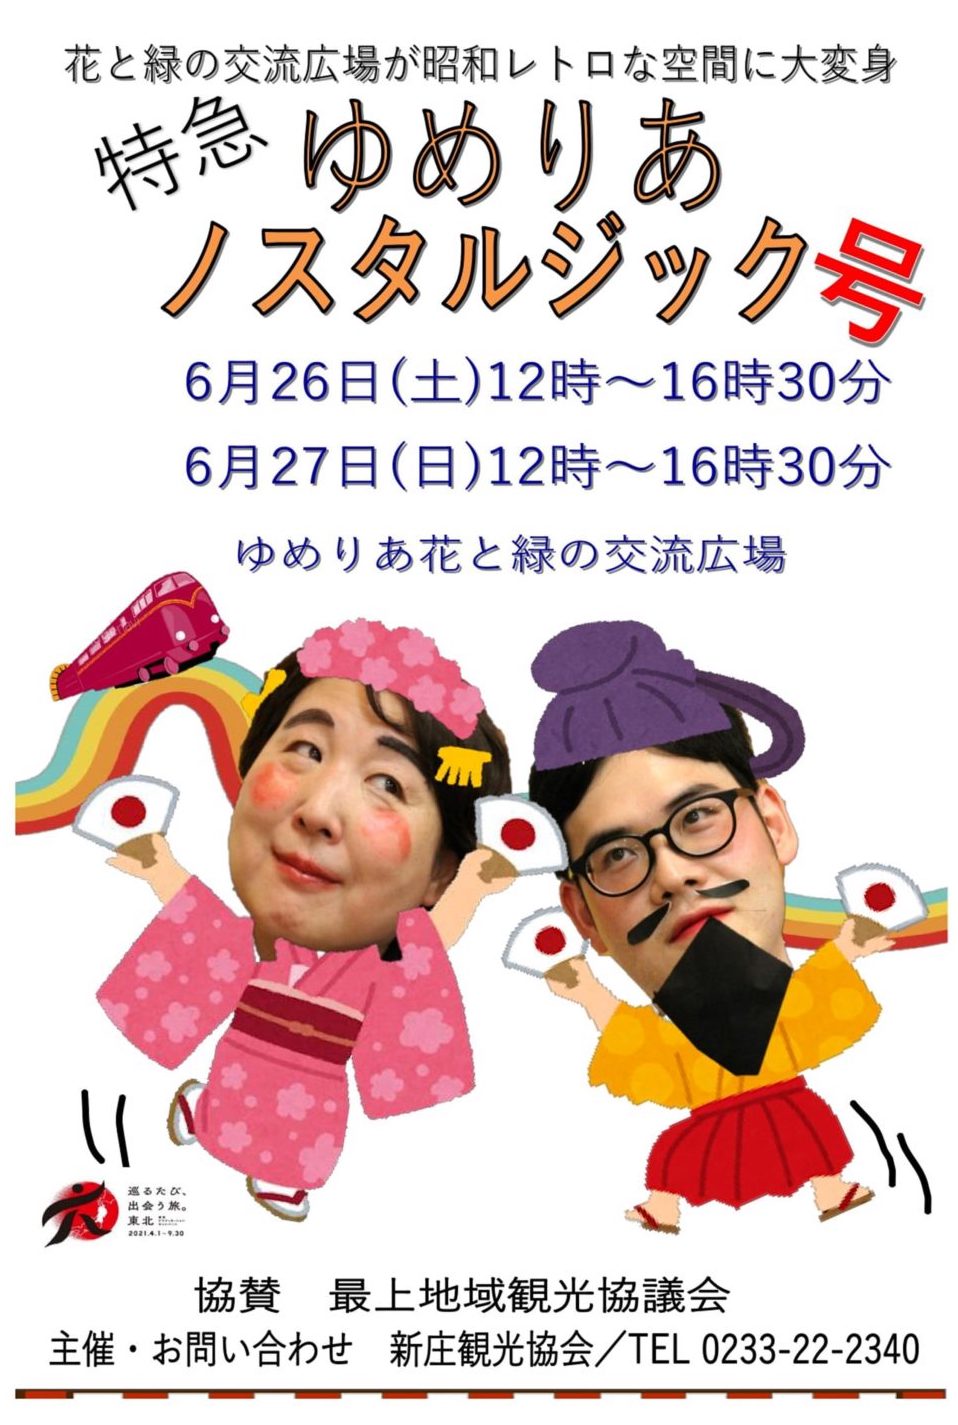 Visit Yamagata 公式 今週末は 夜明けのマルシェリターンズ 寒河江市 しょうない金魚まつり 庄内町 特急ゆめりあノスタルジック号 新庄市 など ユニークな イベント が開催される模様です 週末イベント情報 6月26日 土 6月27日 日